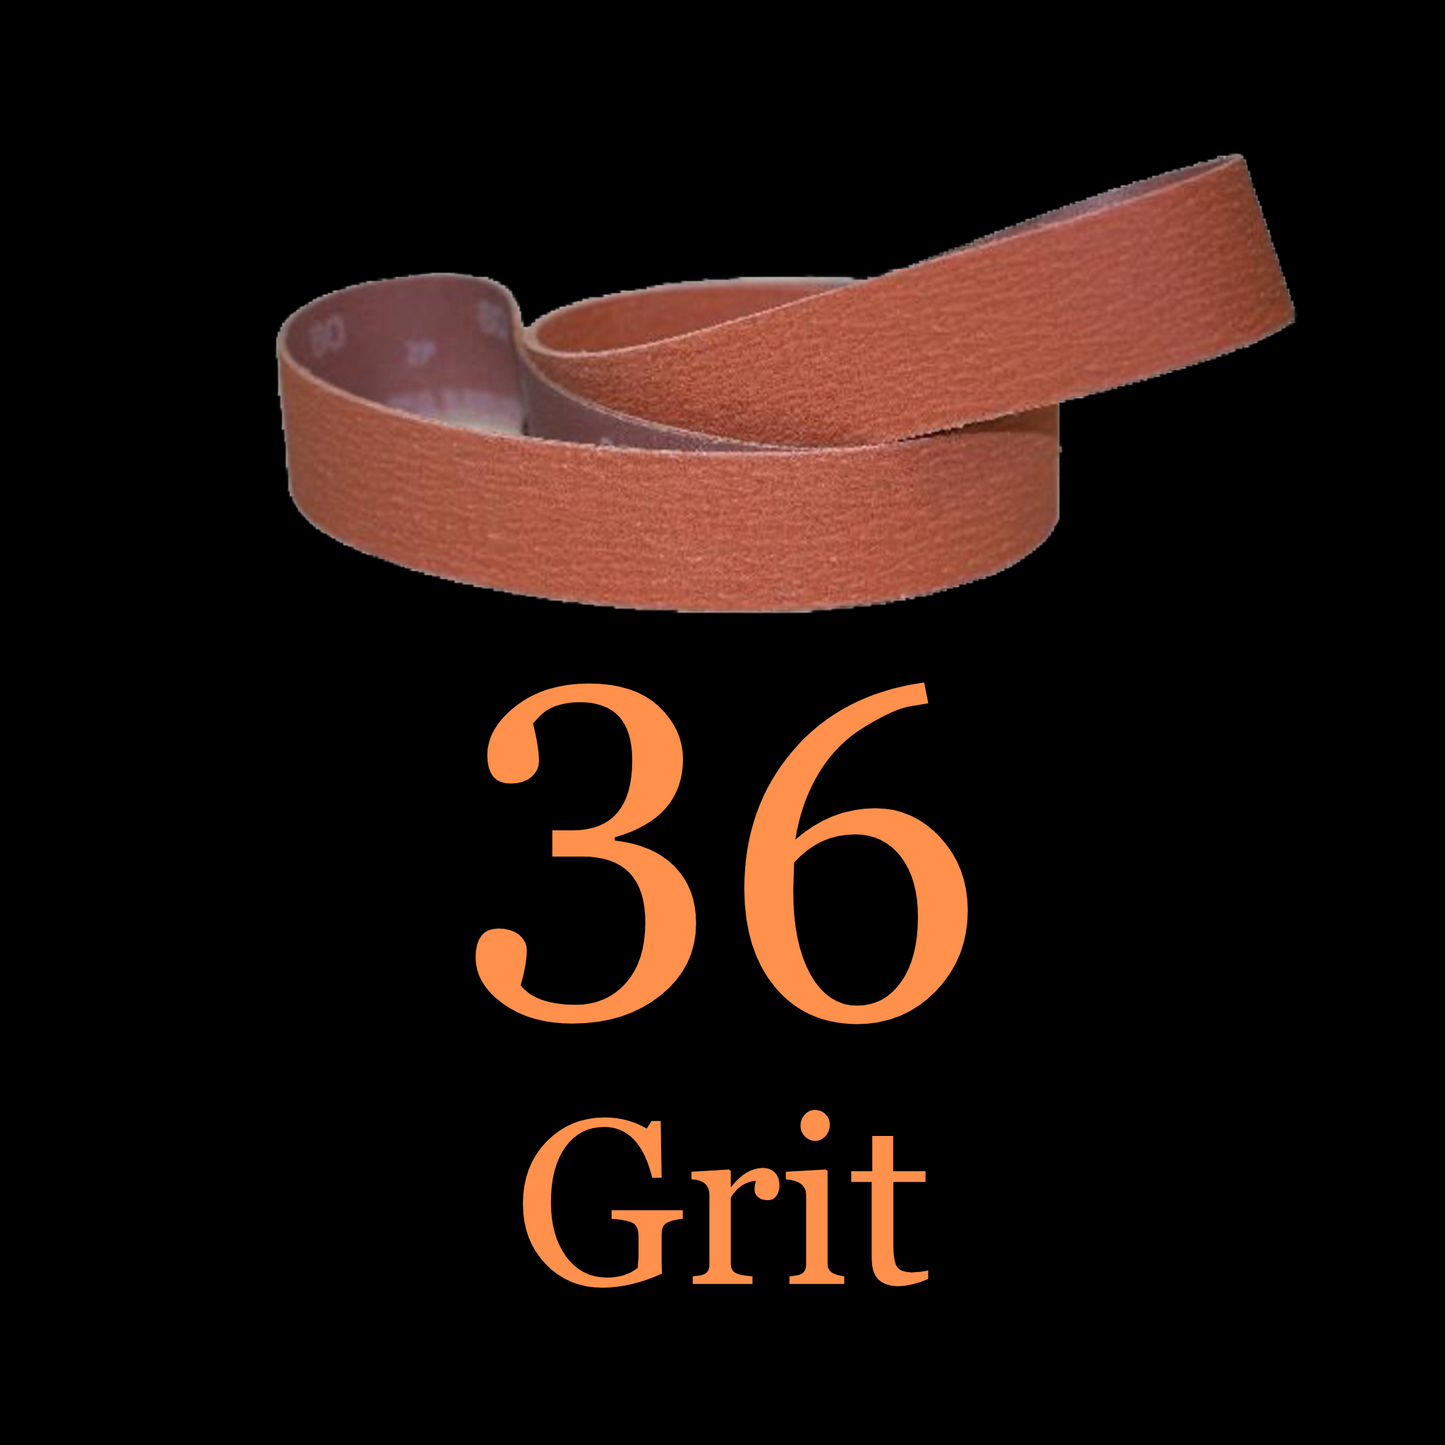 1” x 42” Blaze Ceramic Belt 36 Grit